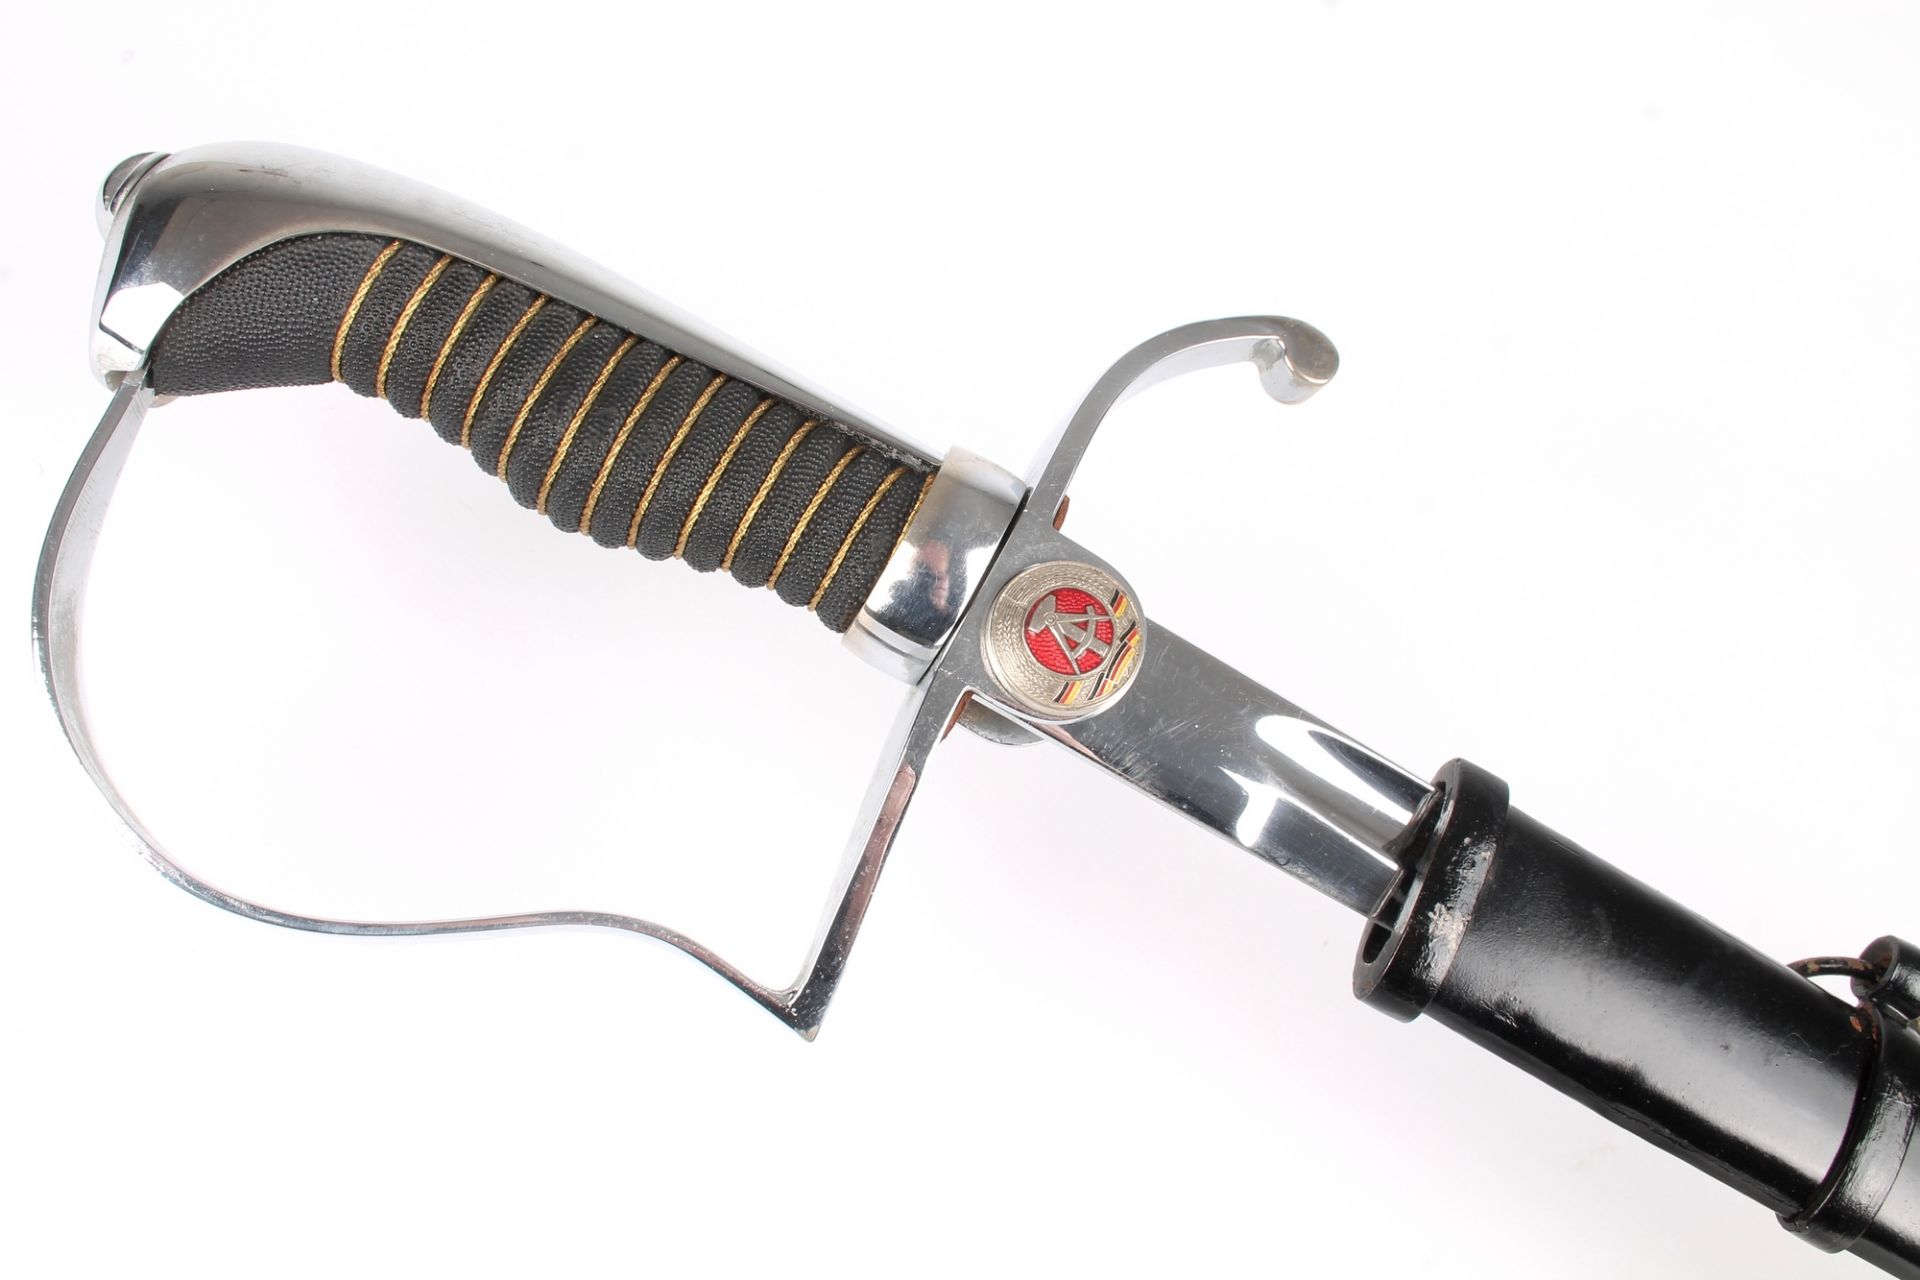 NVA Offizier's Paradesäbel, GDR saber sword,